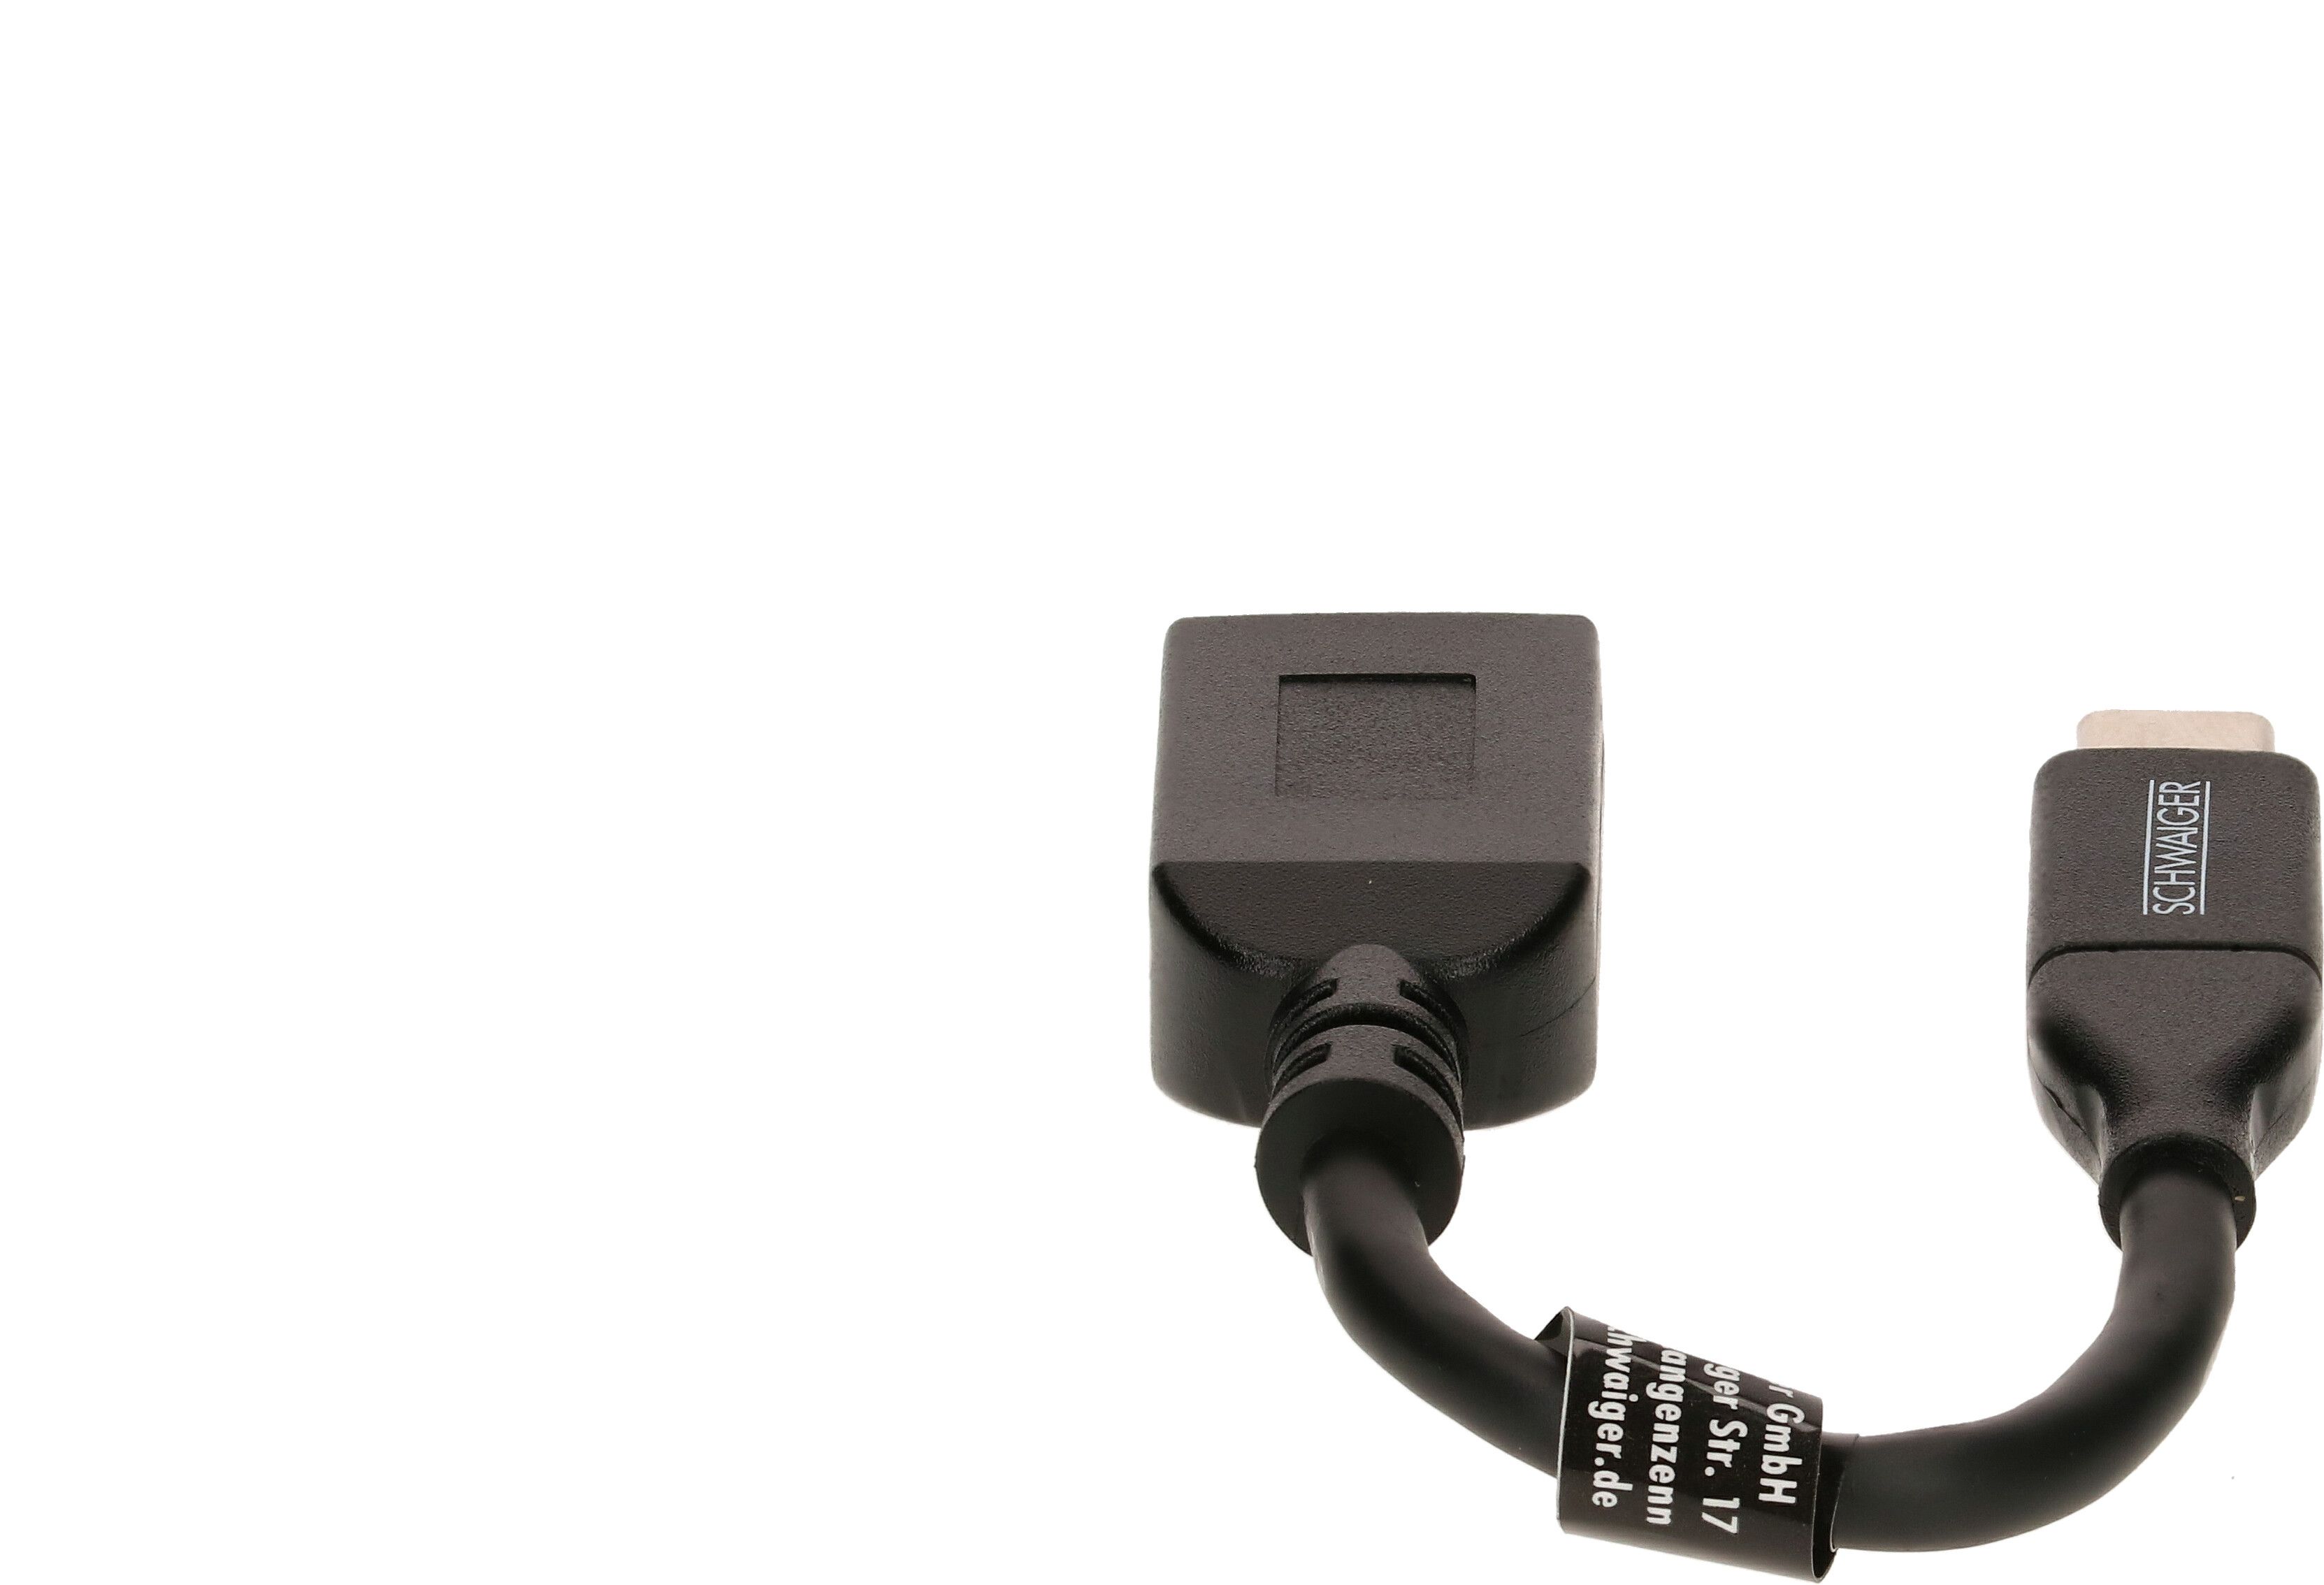 USB 3.1 Anschlusskabel 0.15m schwarz USB-C Stecker USB-A Kupplung - MAX  HAURI AG